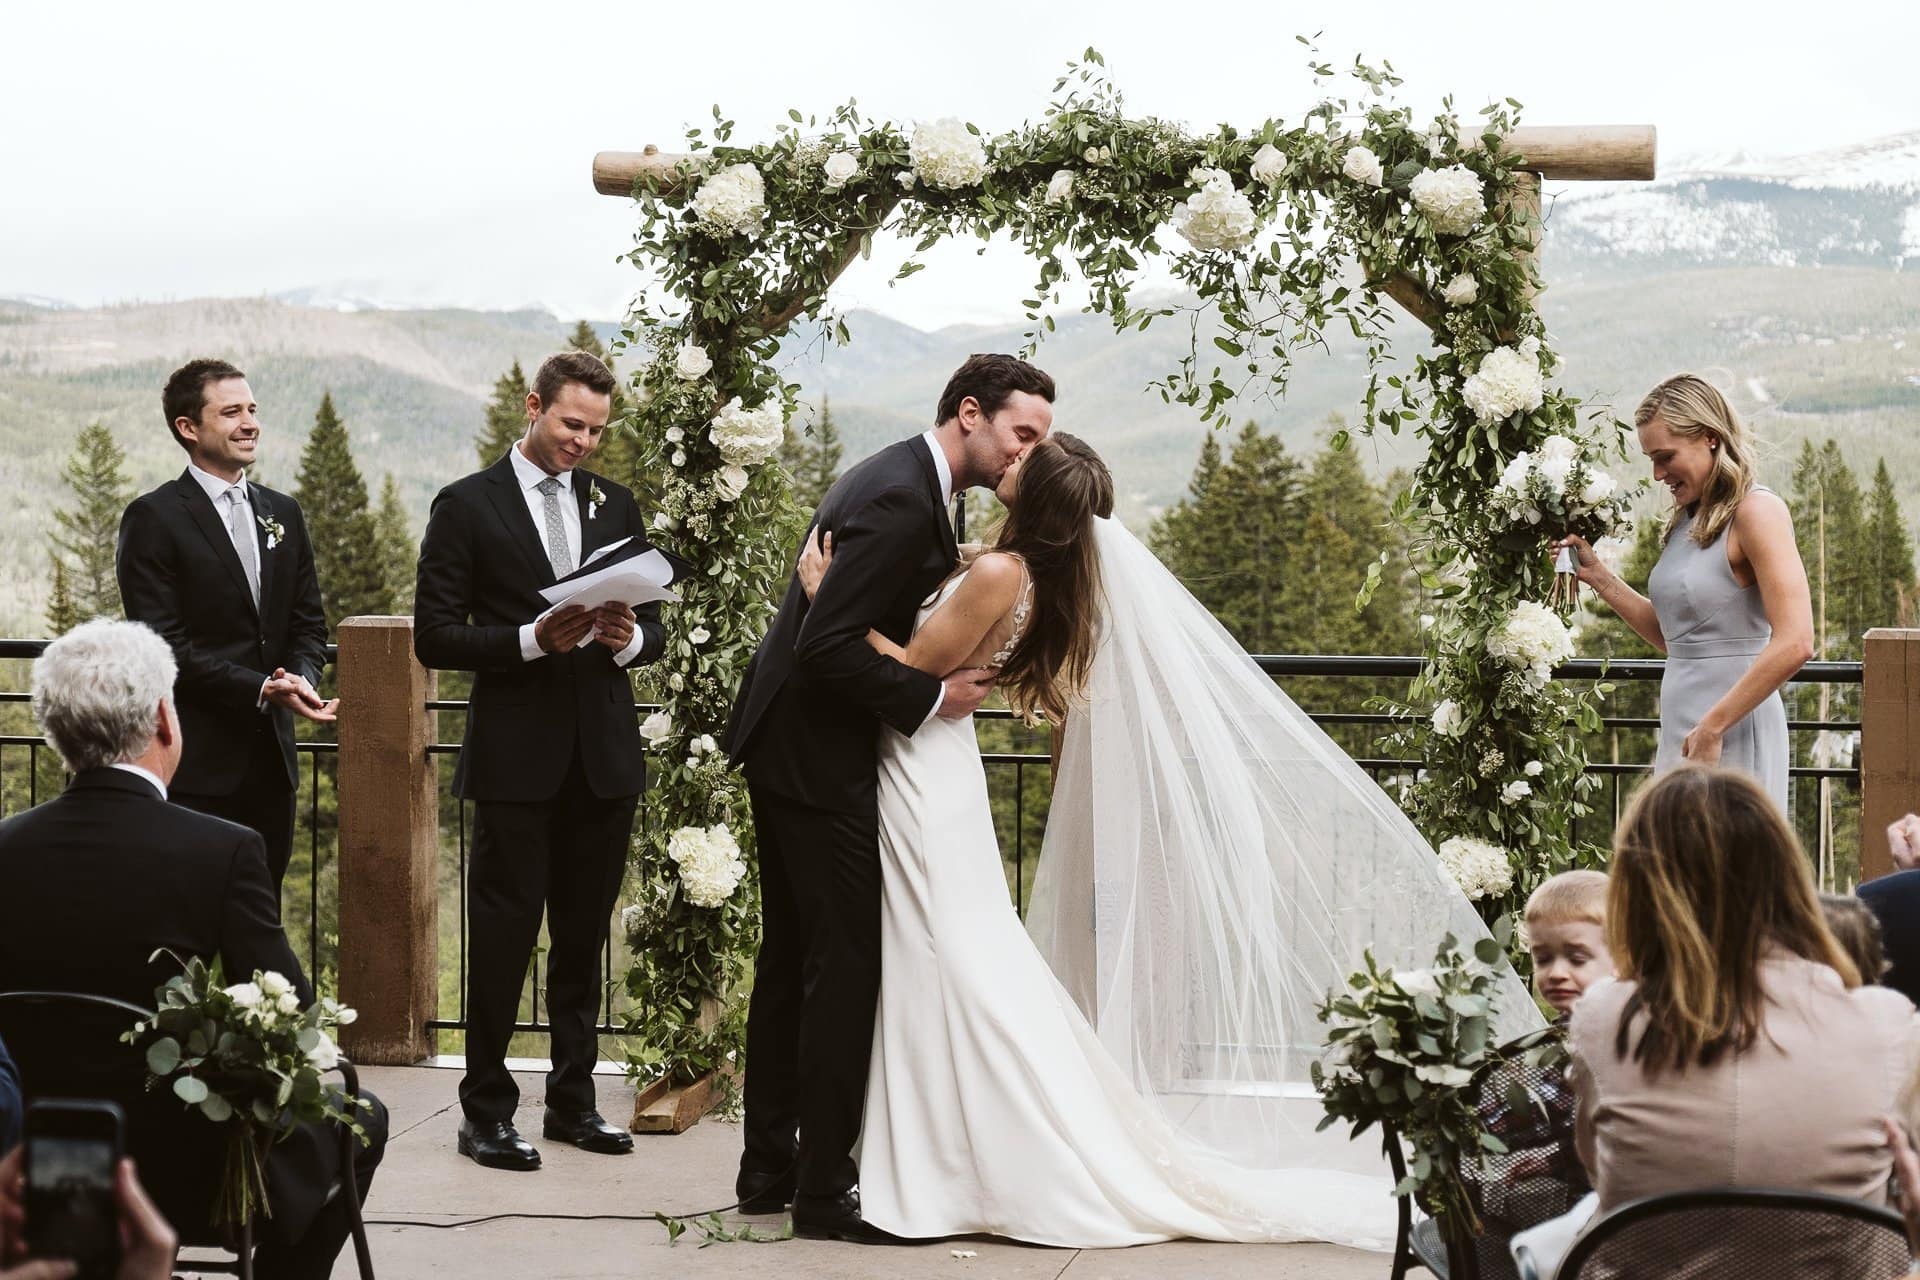 Bride and groom first kiss, Wedding ceremony at Sevens at Breckenridge Ski Resort, Colorado mountain wedding photographer